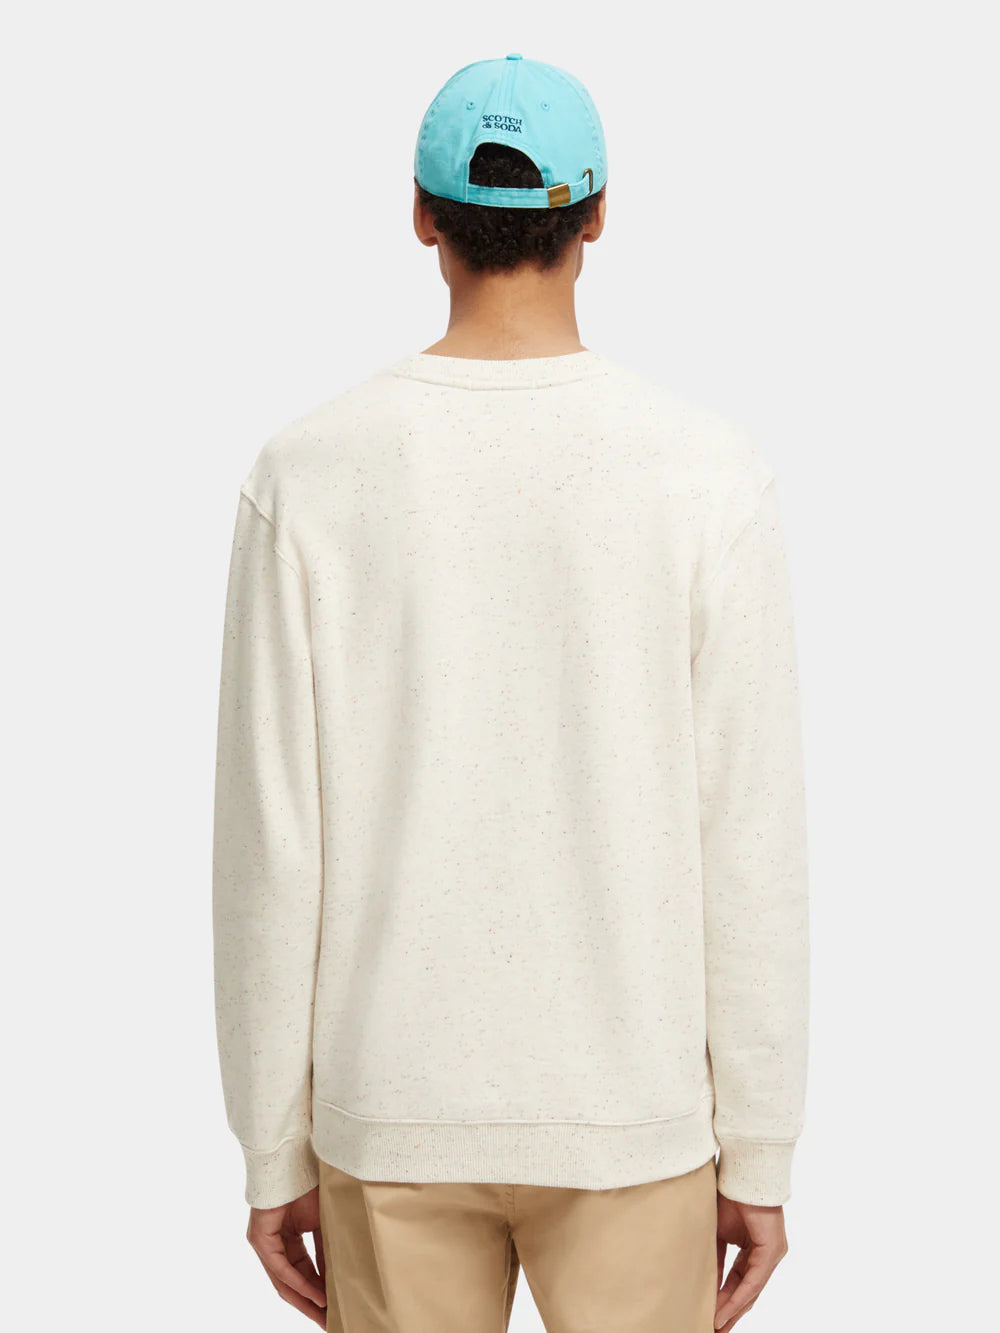 Neps Embroidered Crewneck Sweatshirt - Off White 172997